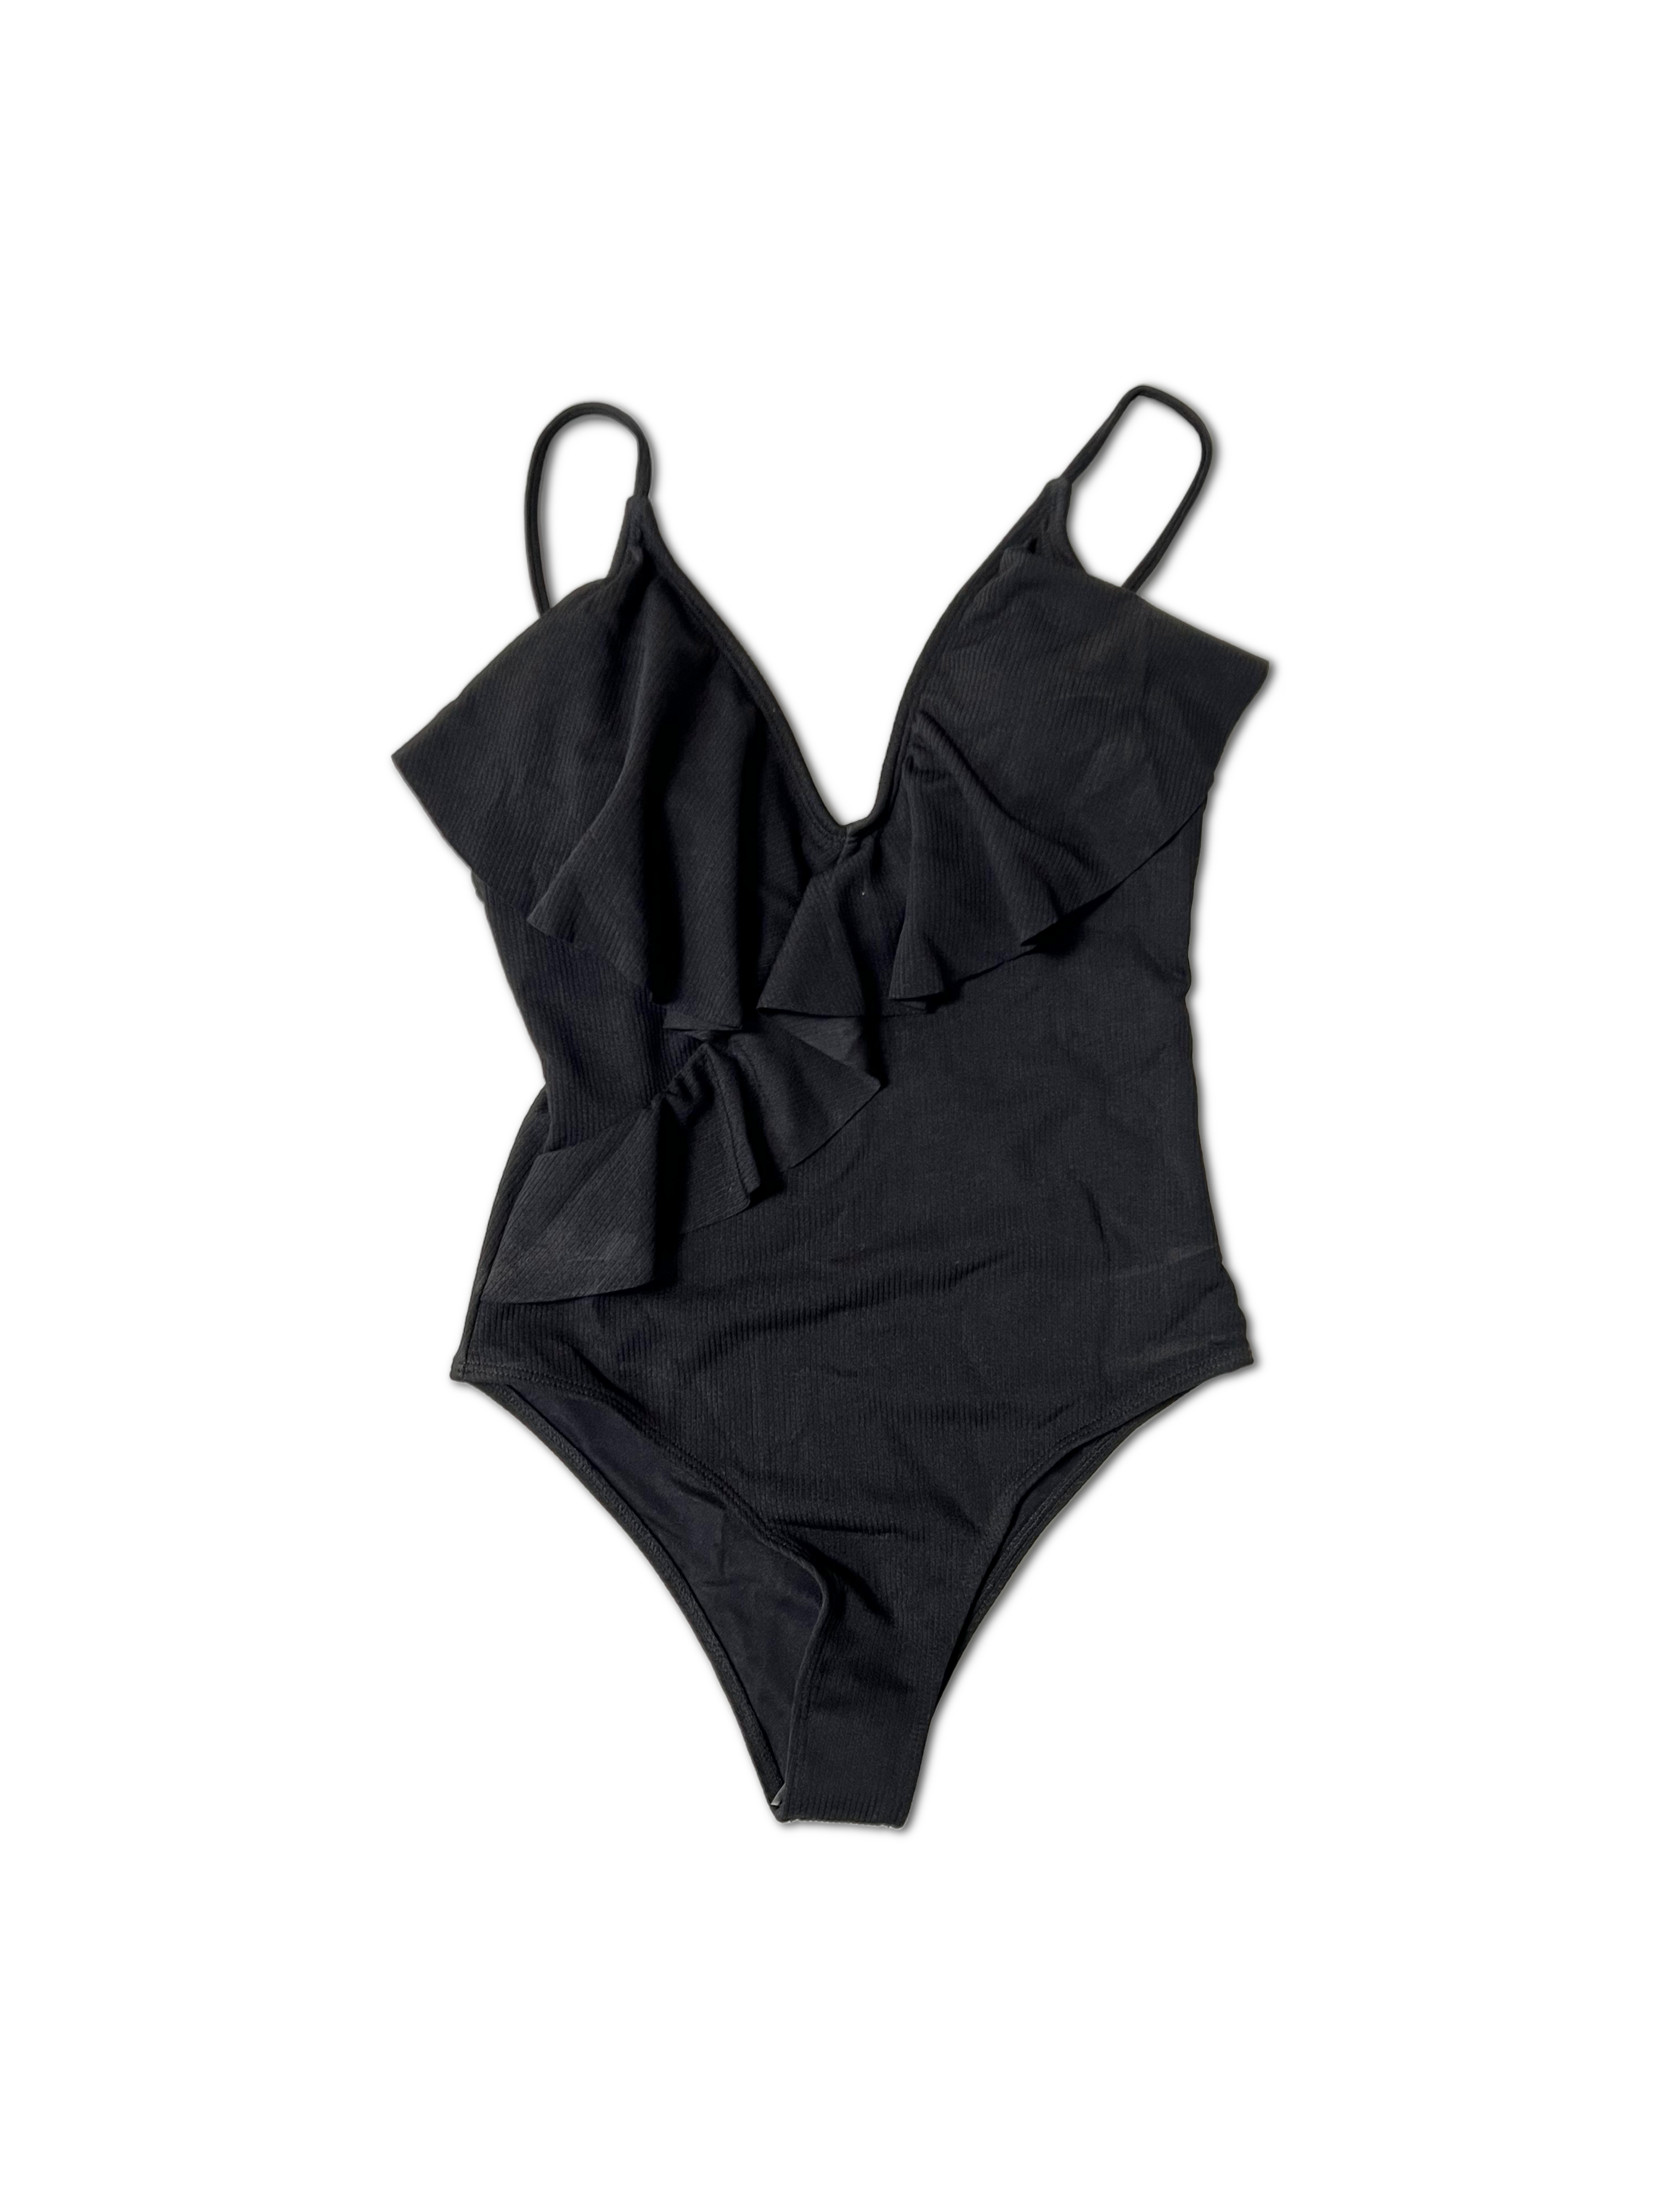 Summer Staple - Swimsuit  Boutique Simplified   